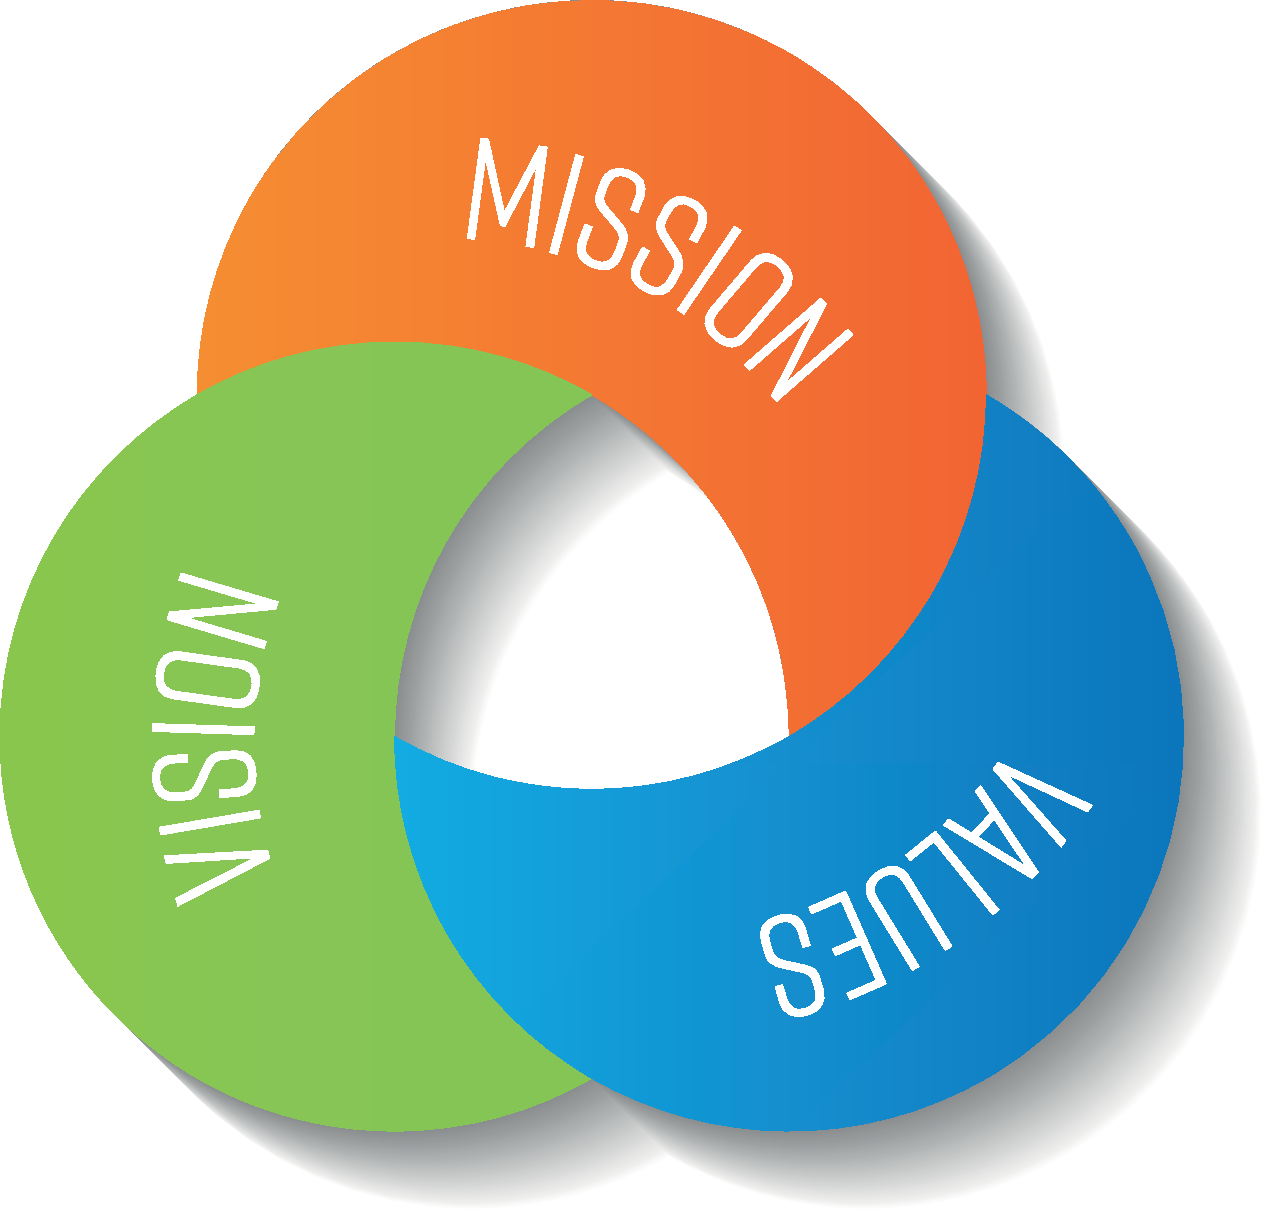 Vision Mission Values